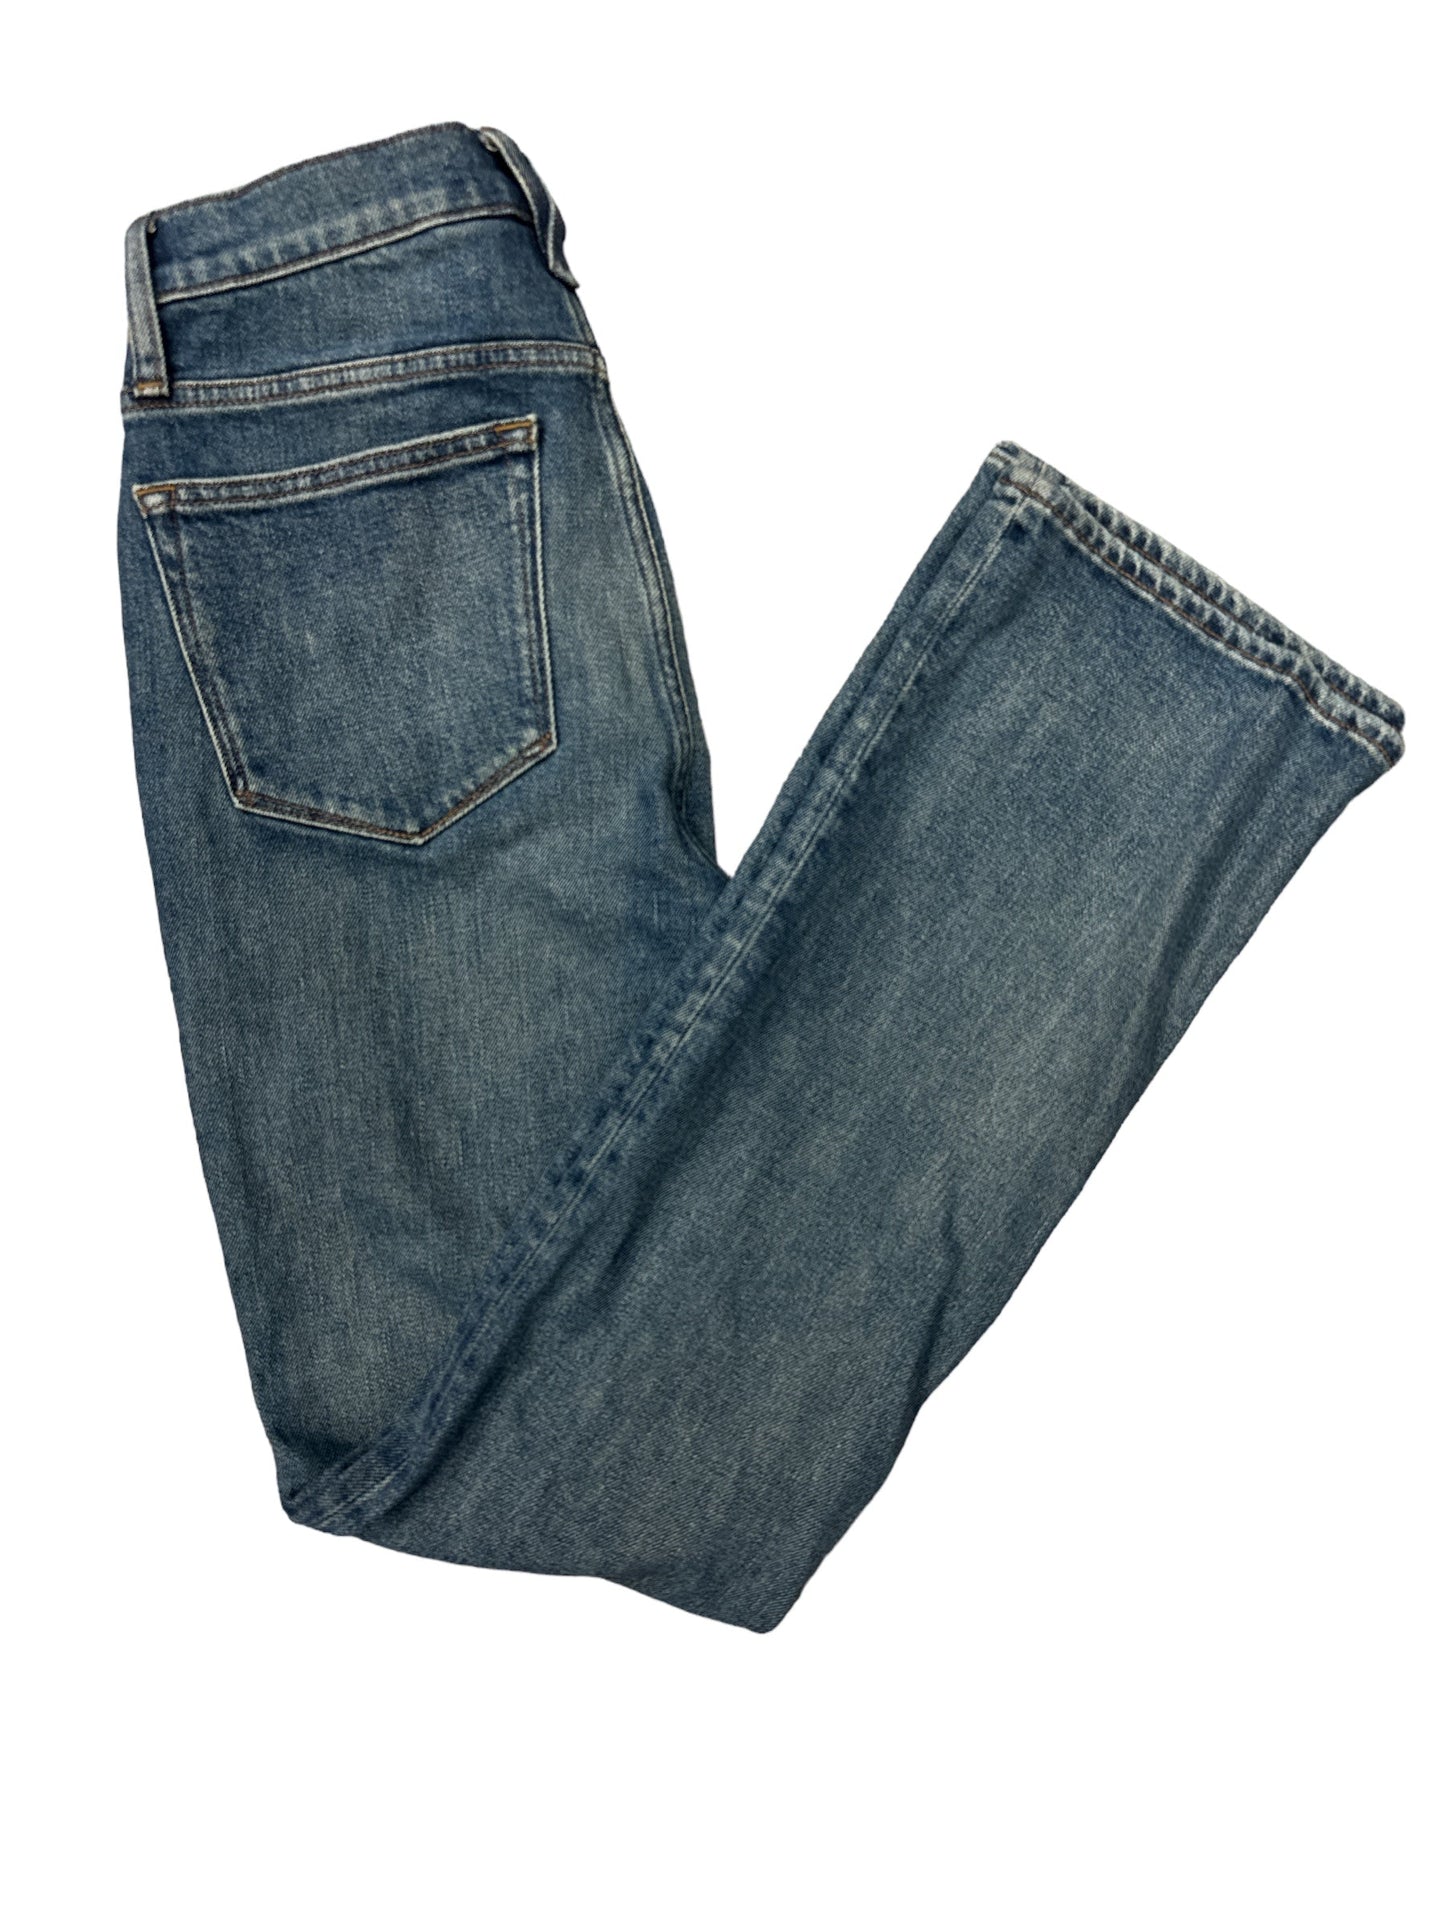 Jeans Designer By J Crew  Size: 4